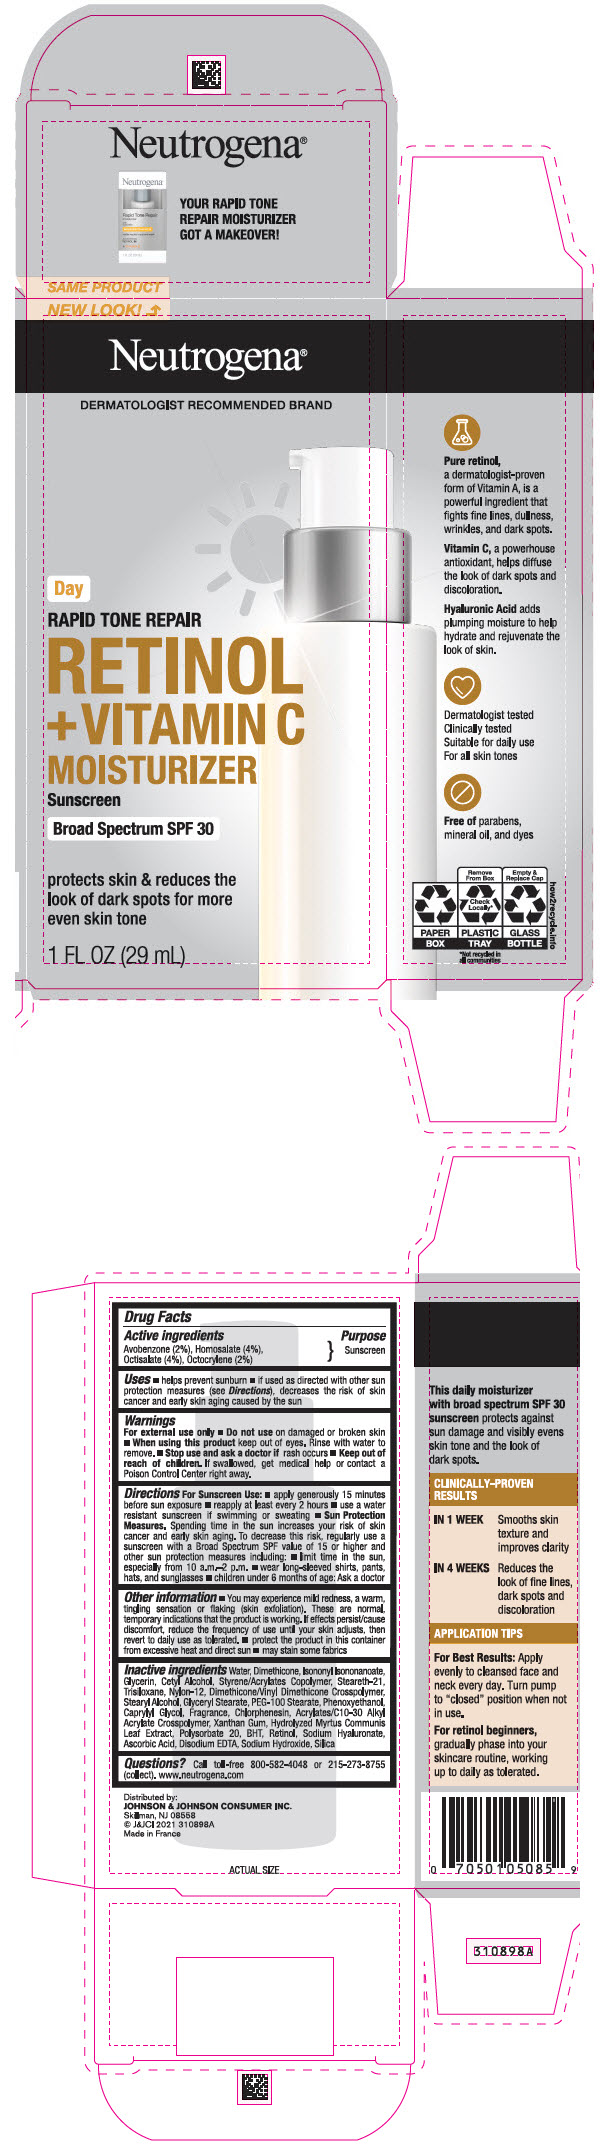 PRINCIPAL DISPLAY PANEL - 29 mL Bottle Carton